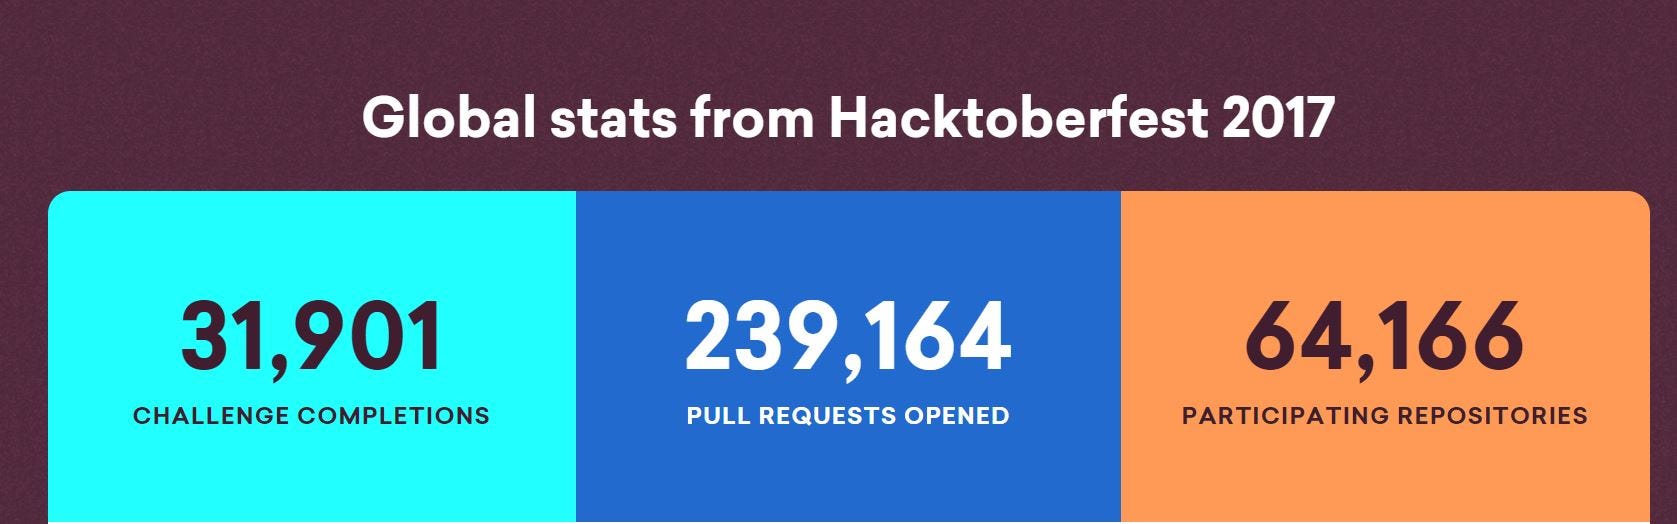 Global statistics from Hacktoberfest 2017 as found on [the Hacktoberfest website](https://hacktoberfest.digitalocean.com/).